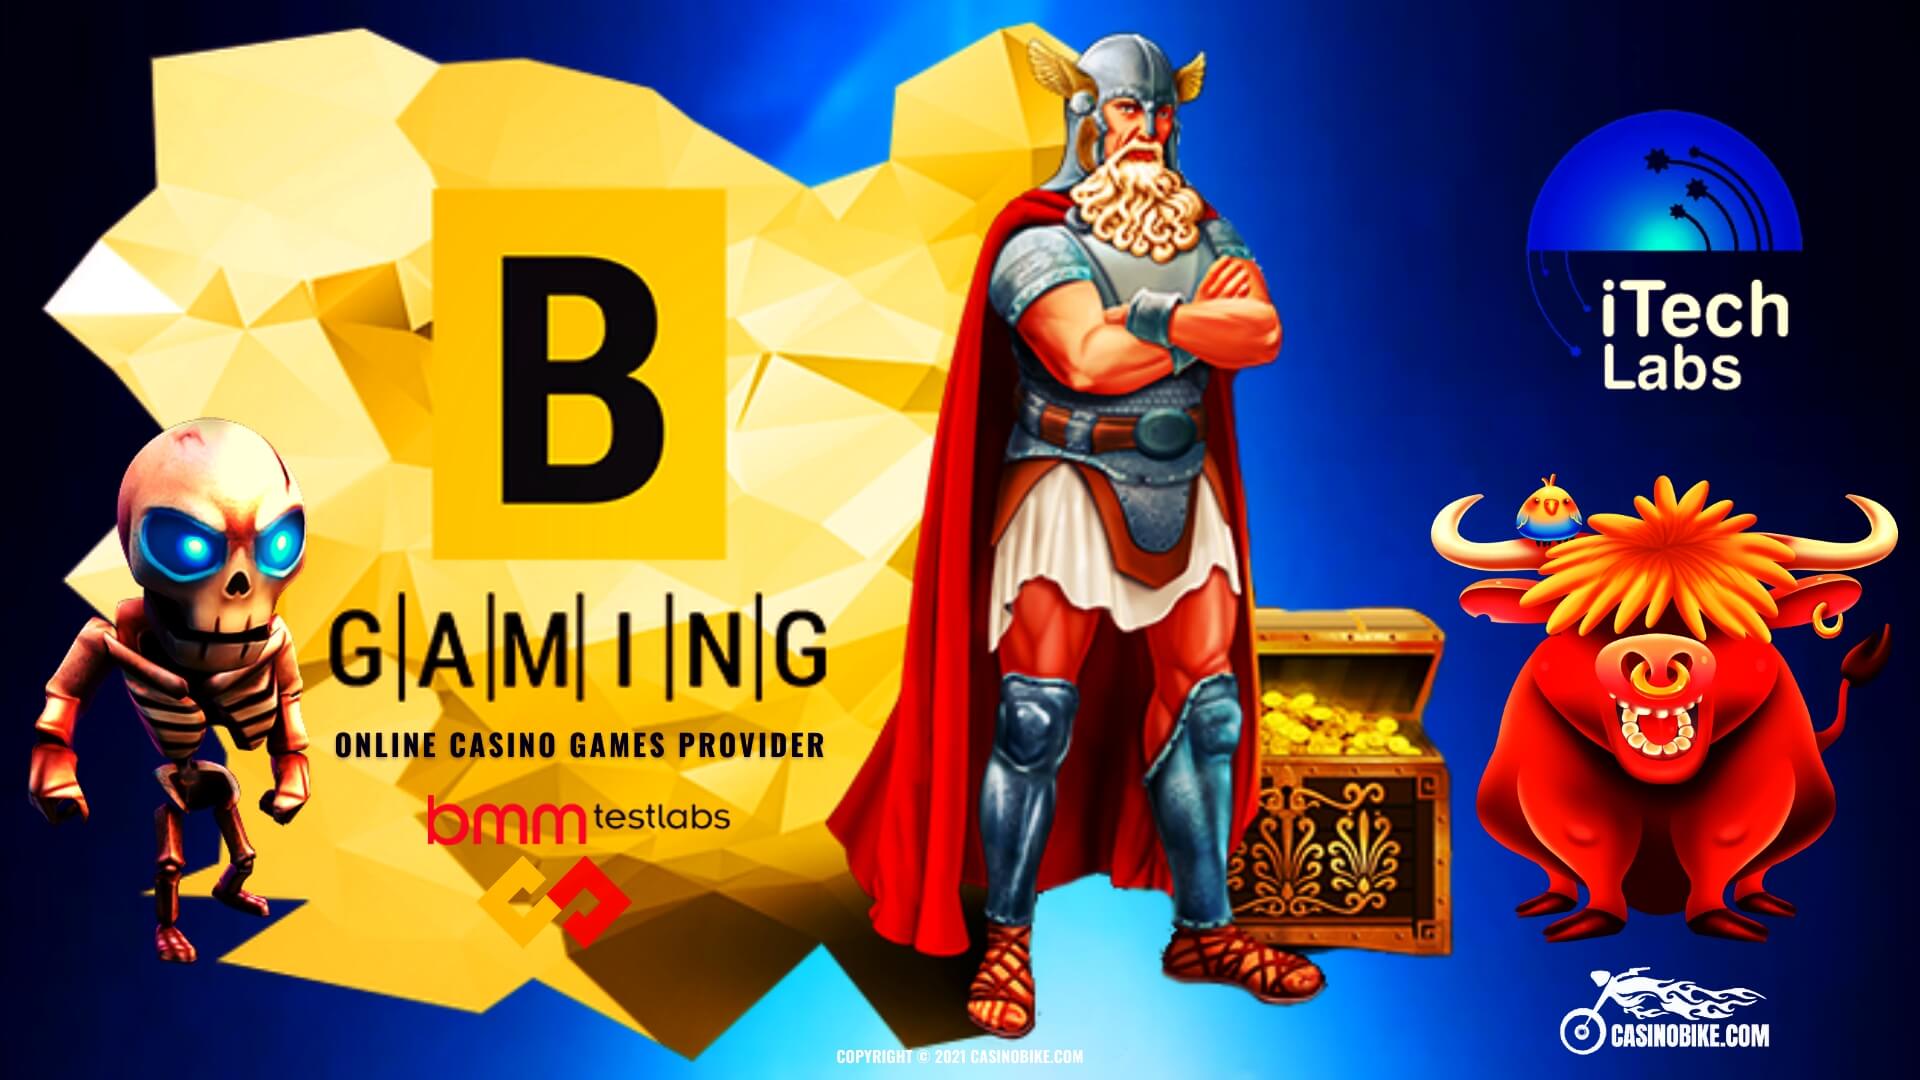 BGaming Casino Games Provider Review